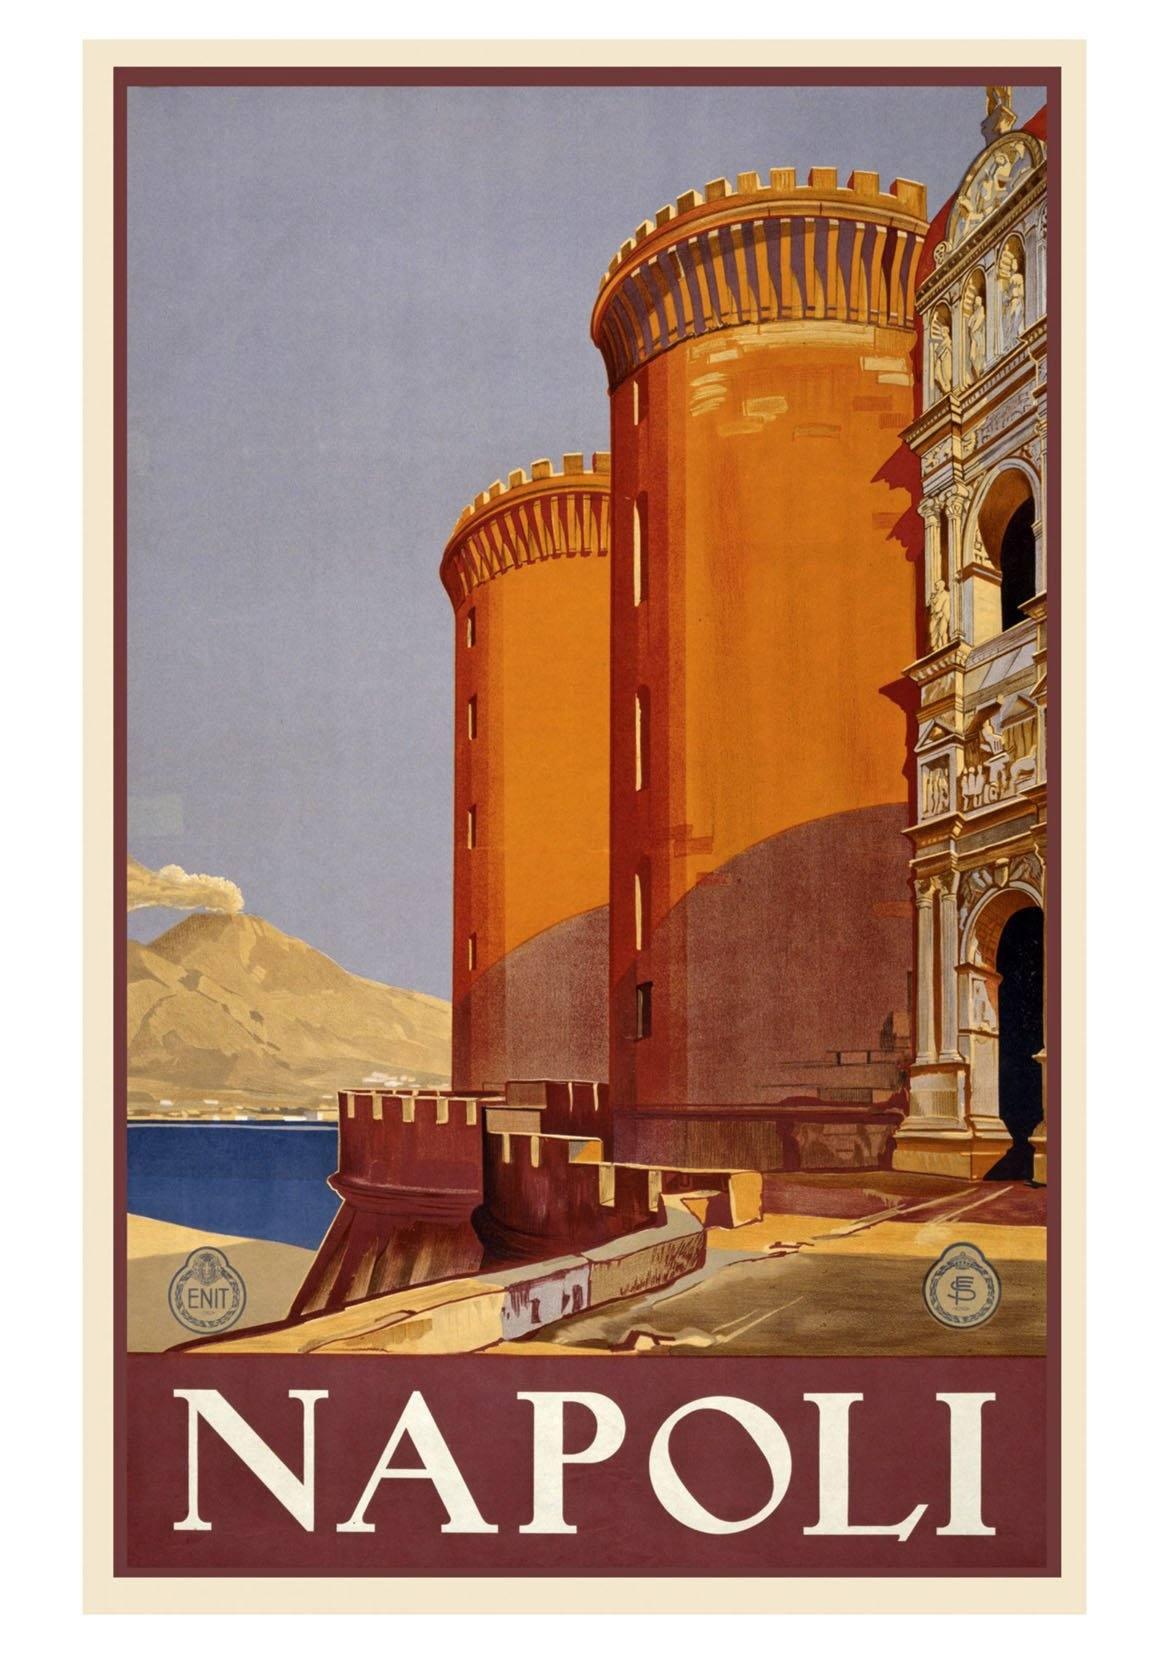 NAPOLI TRAVEL POSTER: Italian Travel Advert with Castle - Pimlico Prints